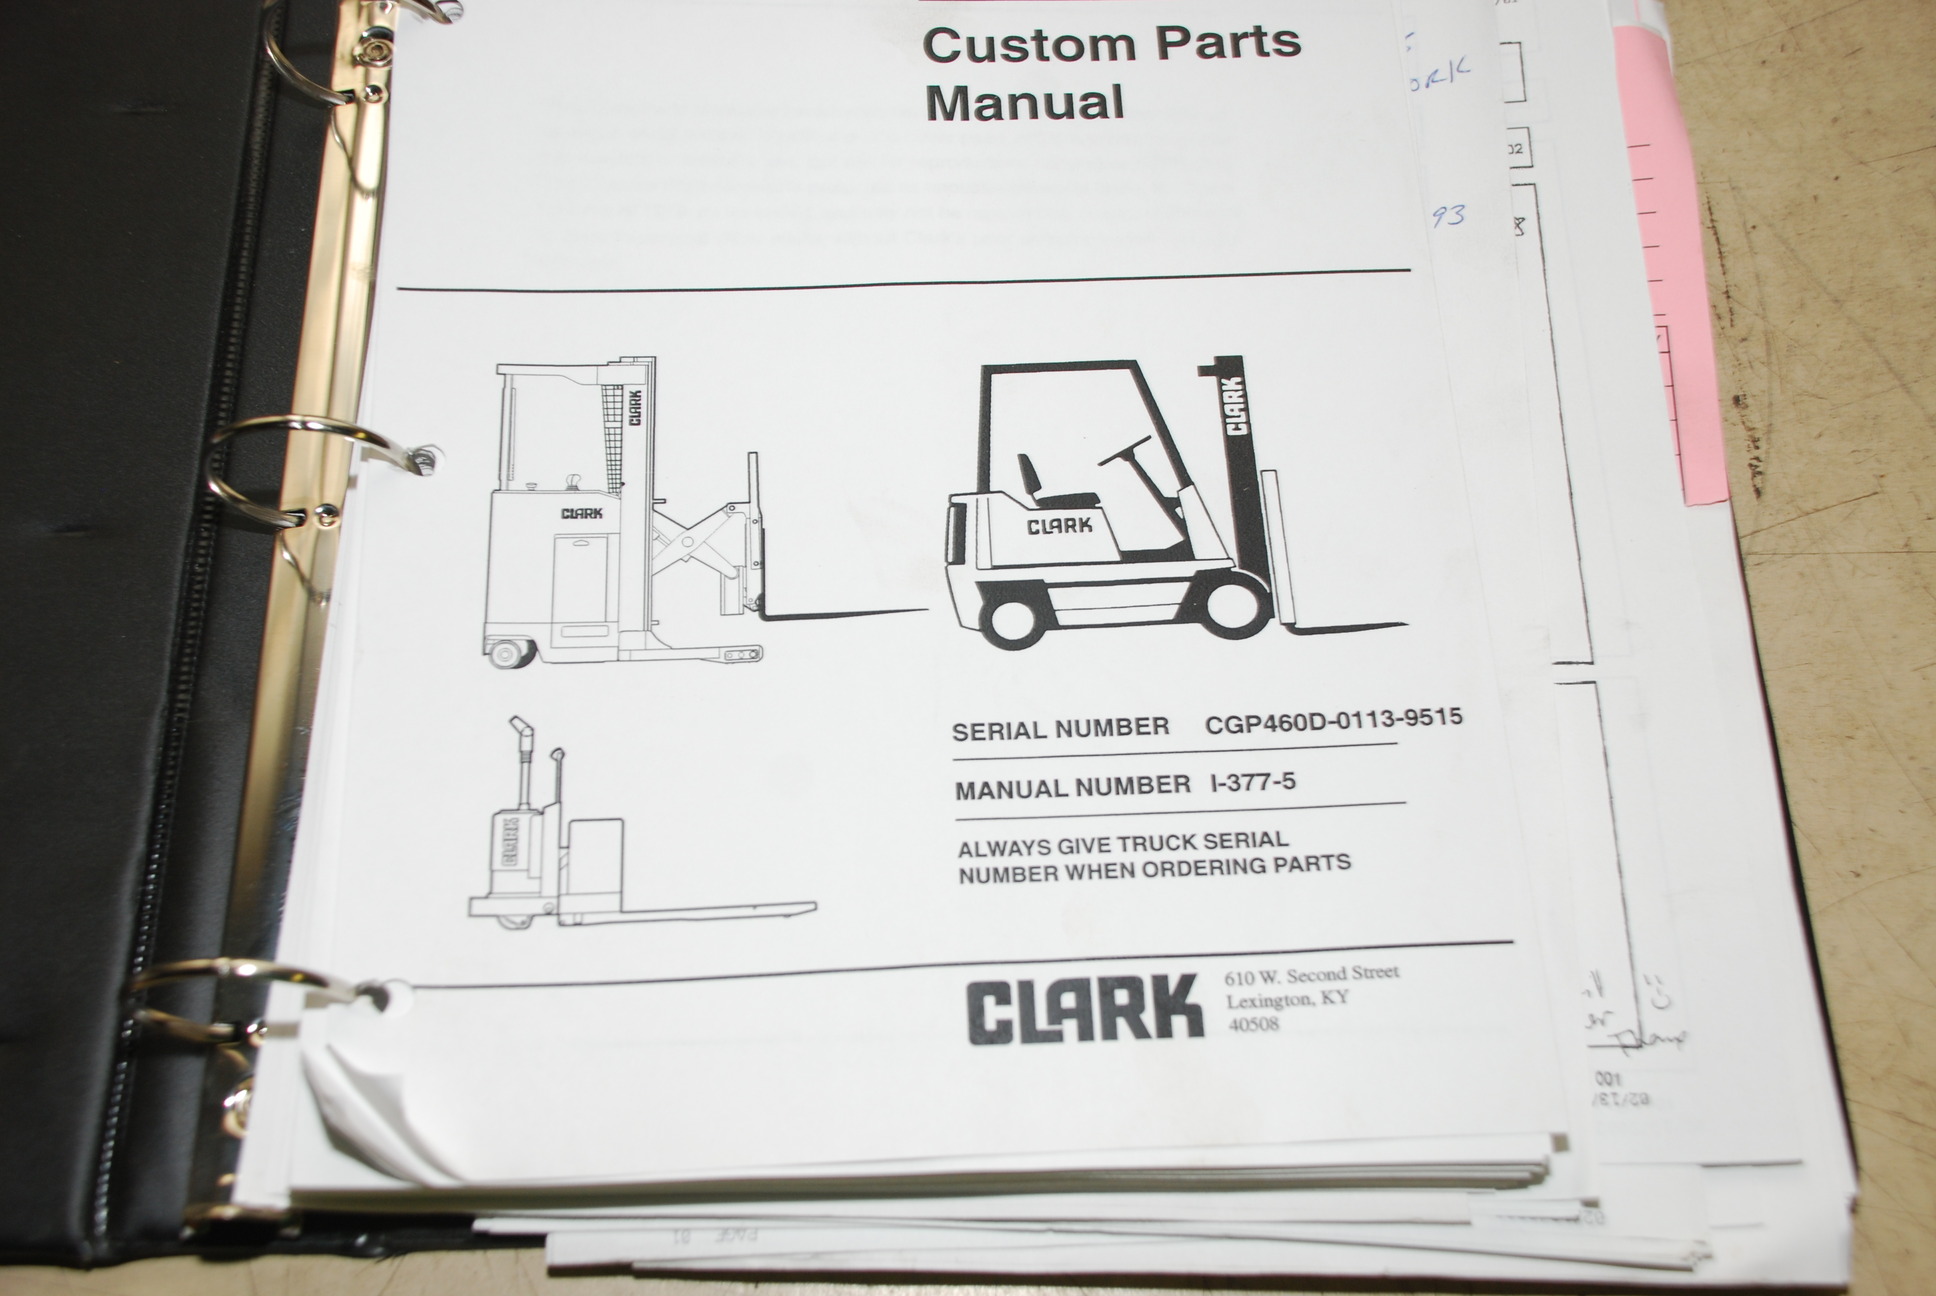 4871 0002 Jpg Of Clark Forklift Custom Parts Manual Serial Number Cgp460d 0113 9515 4871